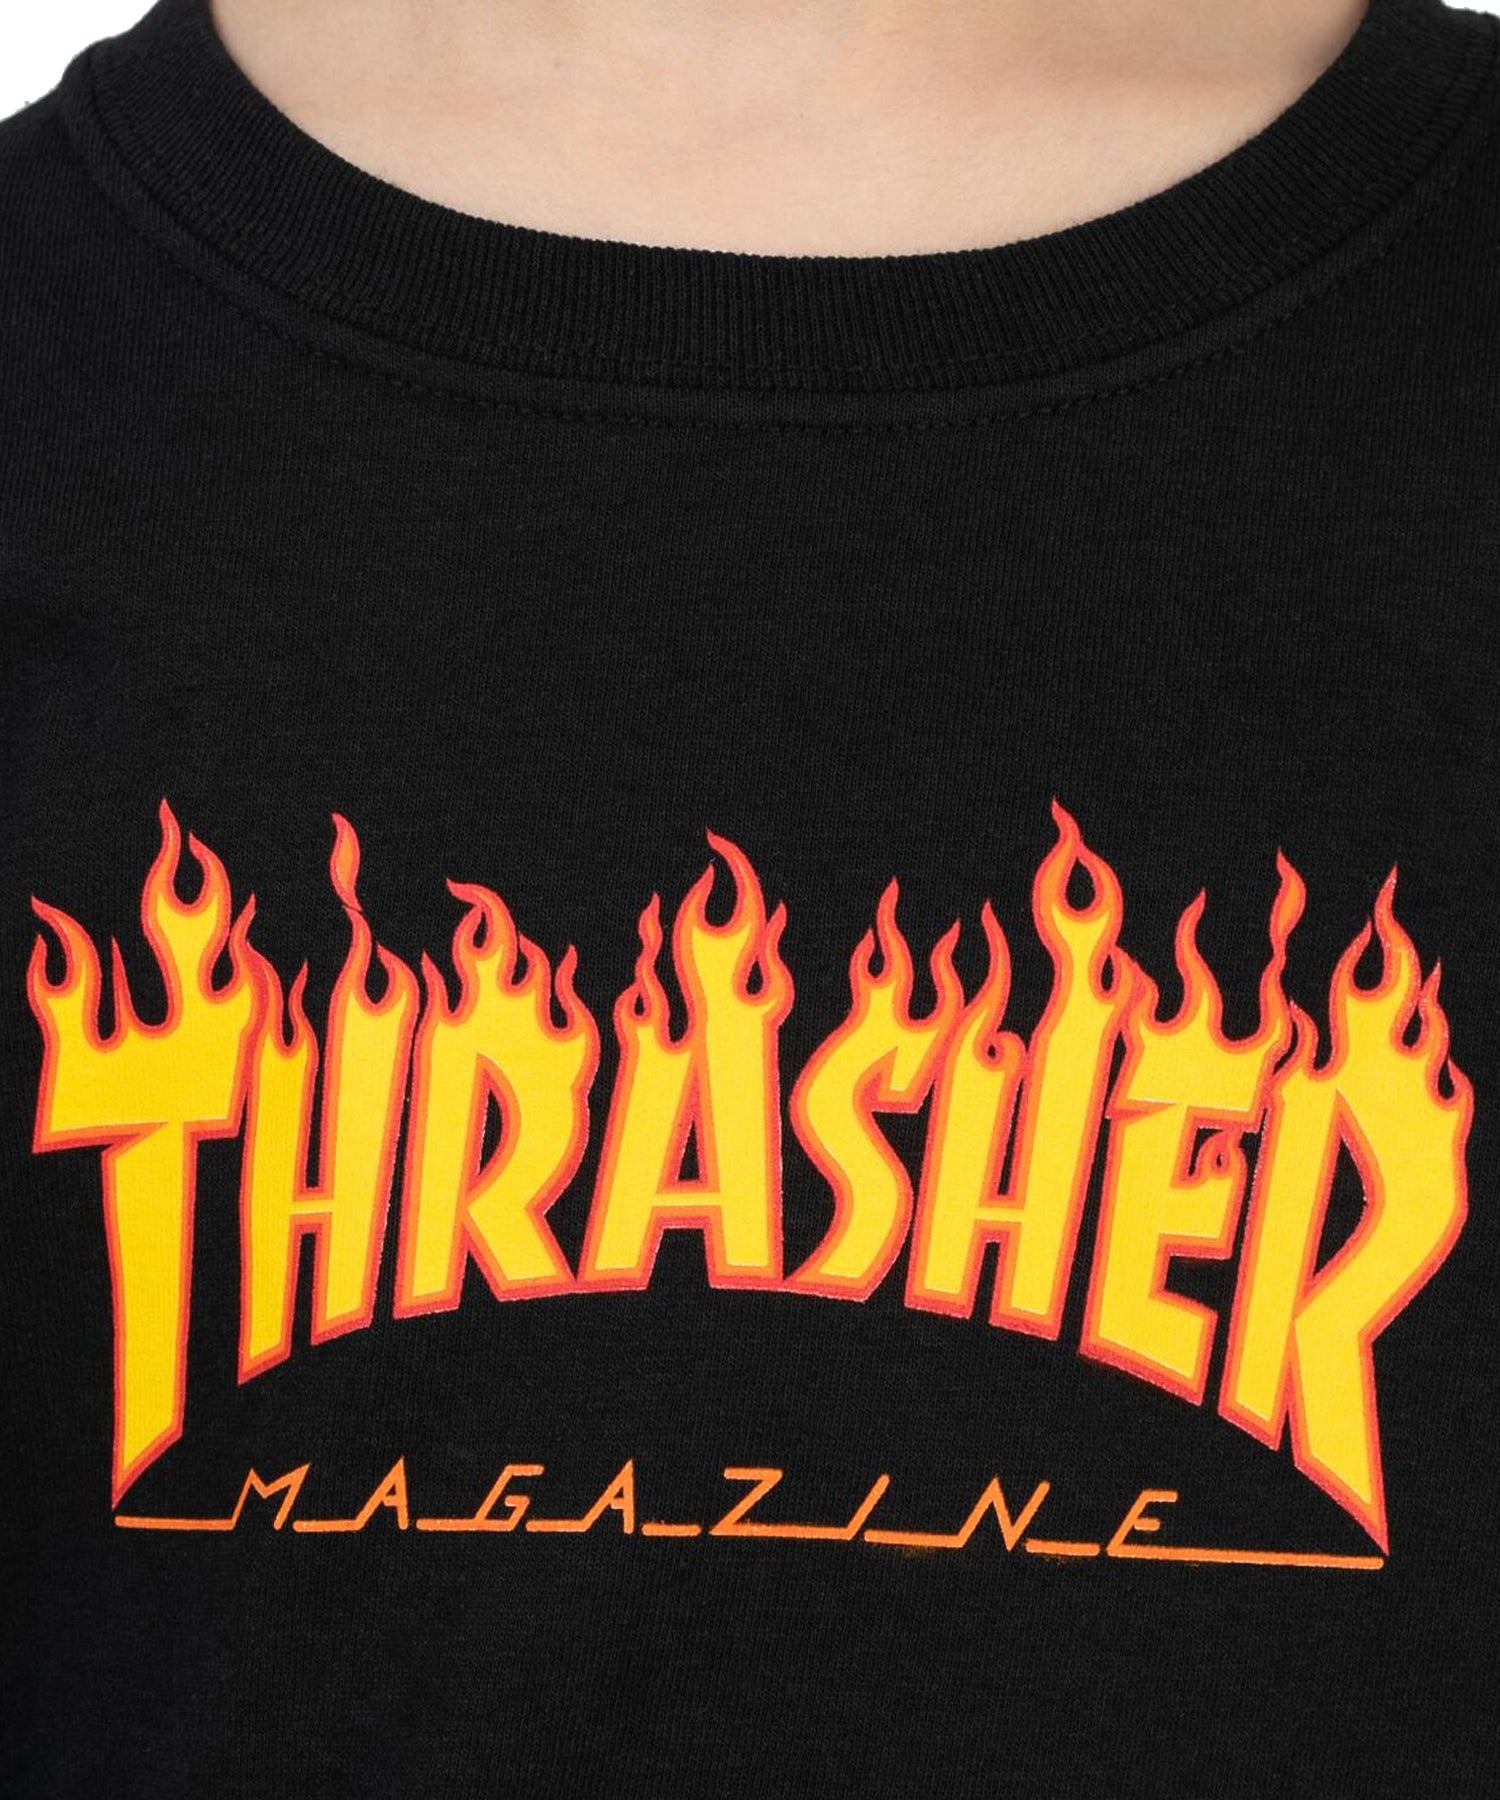 thrasher-t-shirts-flame-kids-BLACK camiseta-COLOR-NEGRO para niños/as de Thrasher-100% algodón.-logo thrasher en amarillo